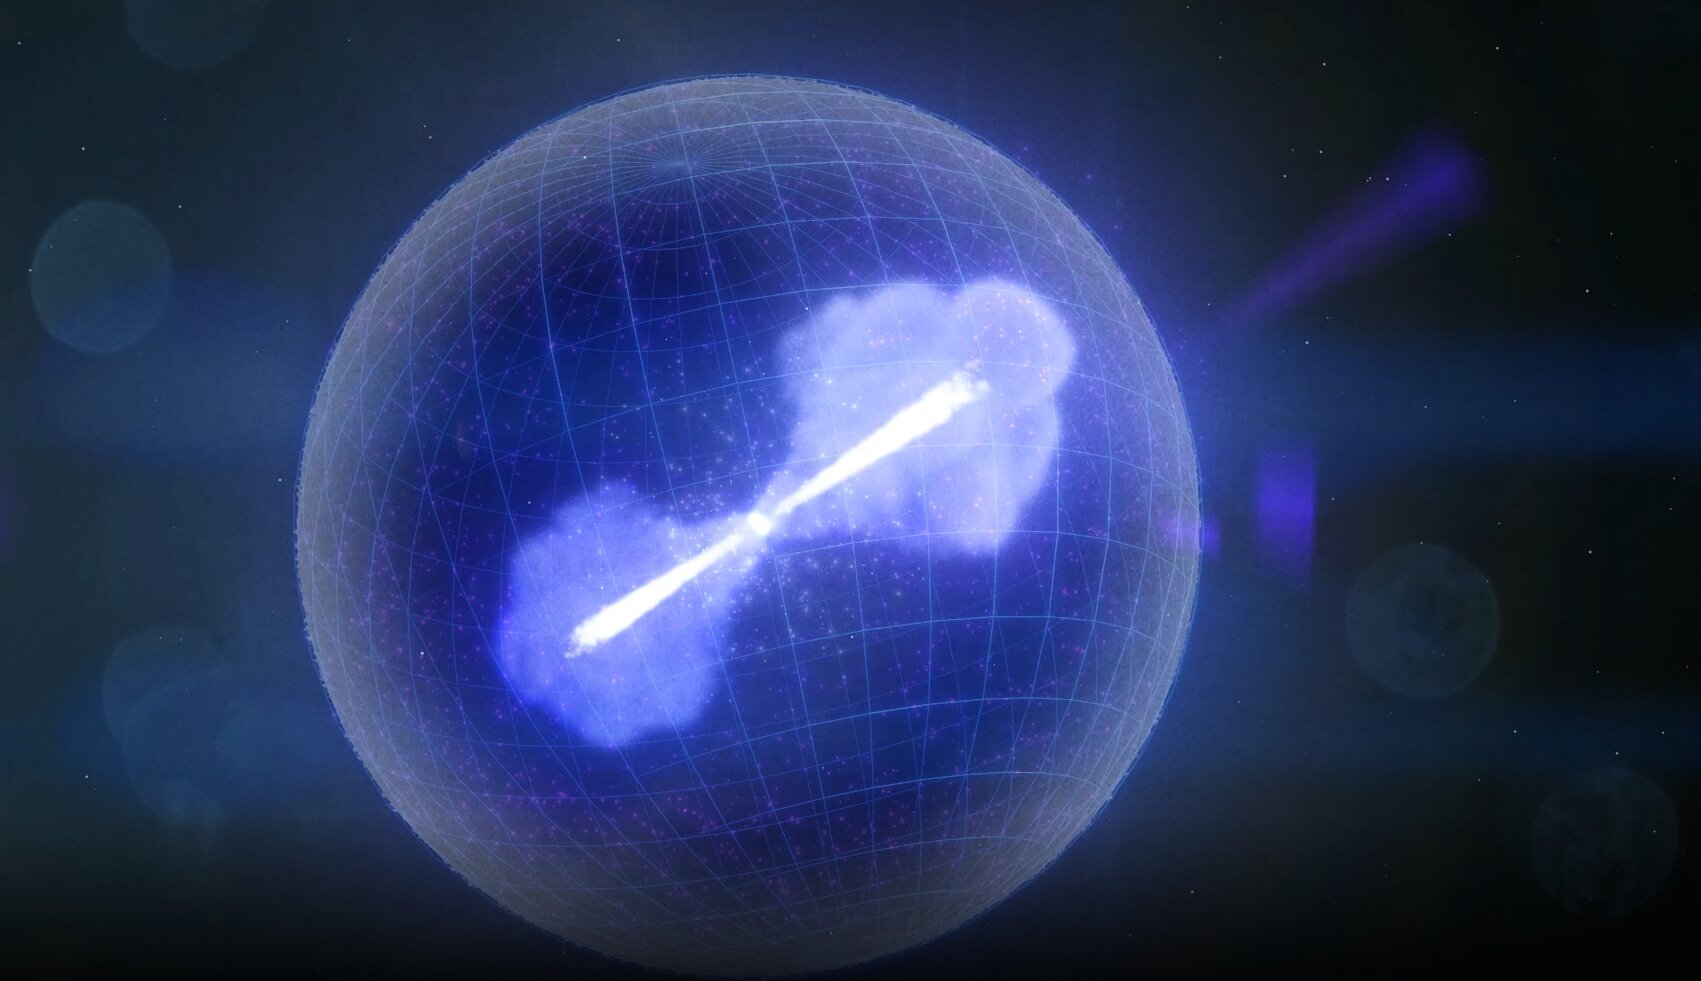 Fermi spots a supernova’s ‘fizzled’ gamma-ray burst